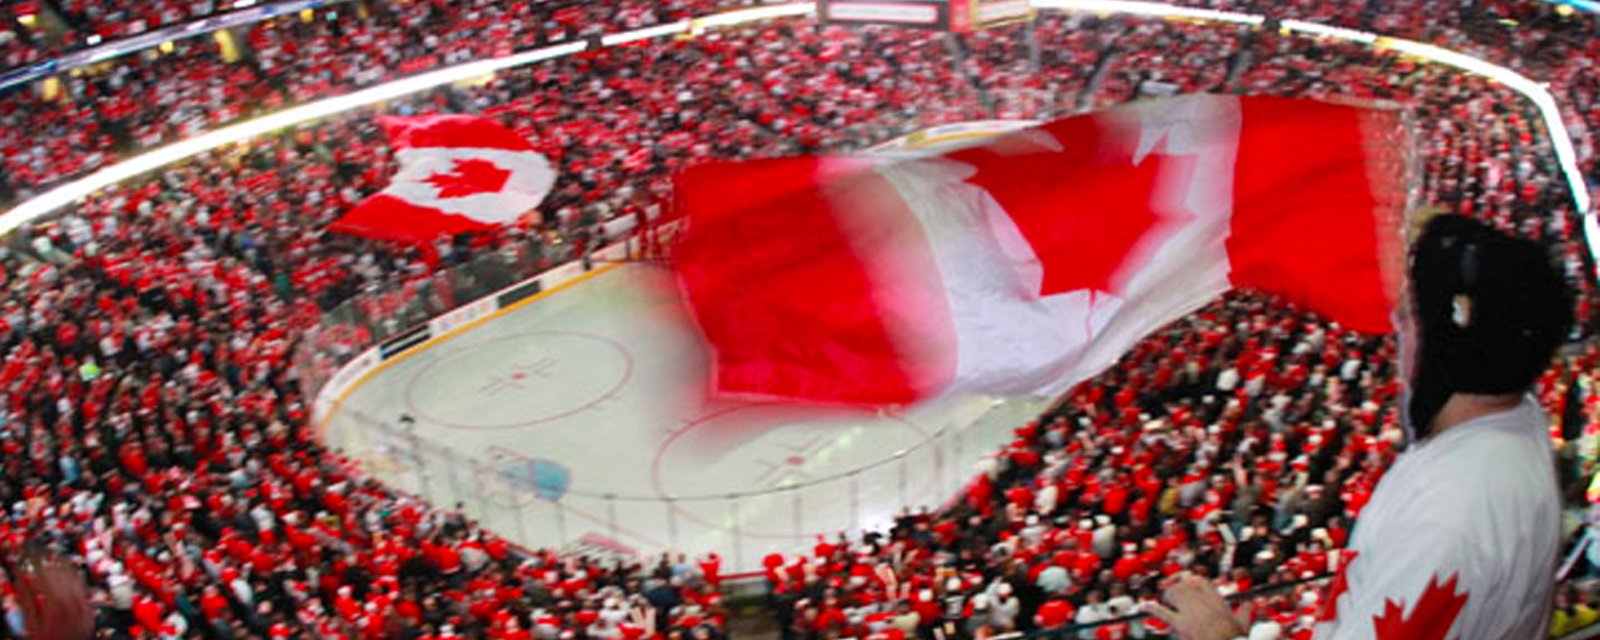 Canadian teams step up to host return of 2020 NHL season